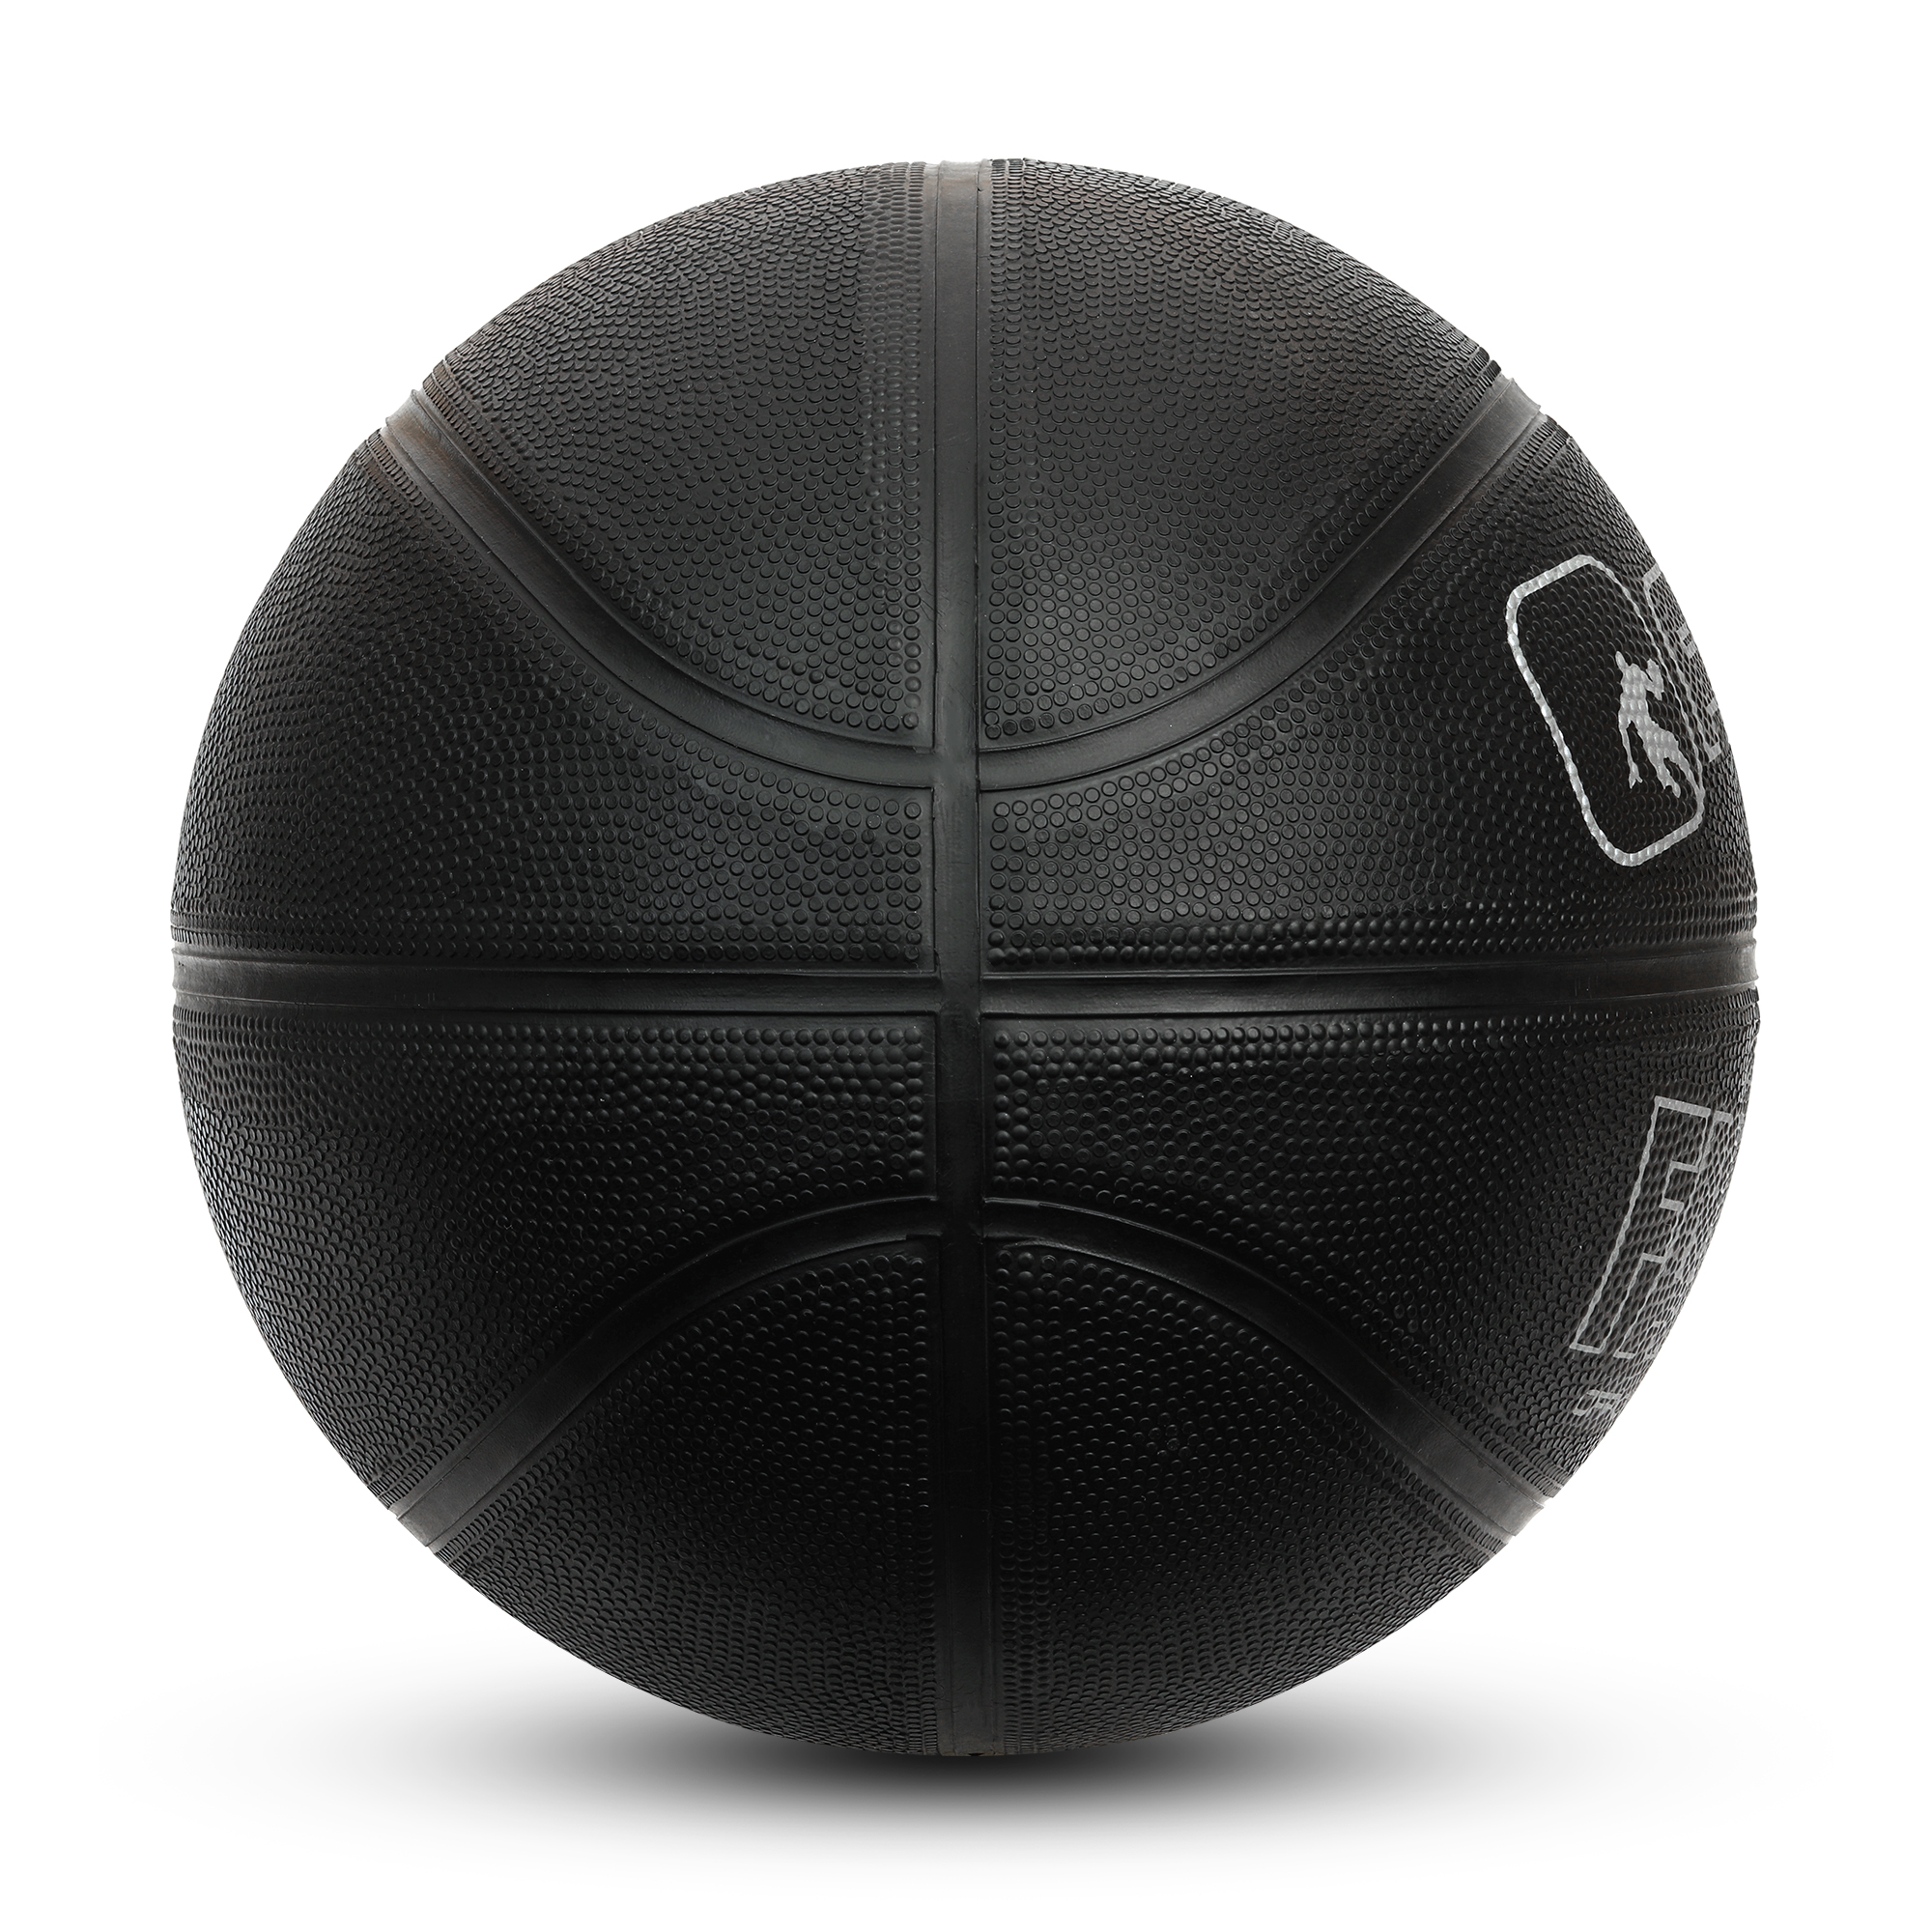 AND1 Fantom Rubber Basketball, Black, 29.5" - image 4 of 5